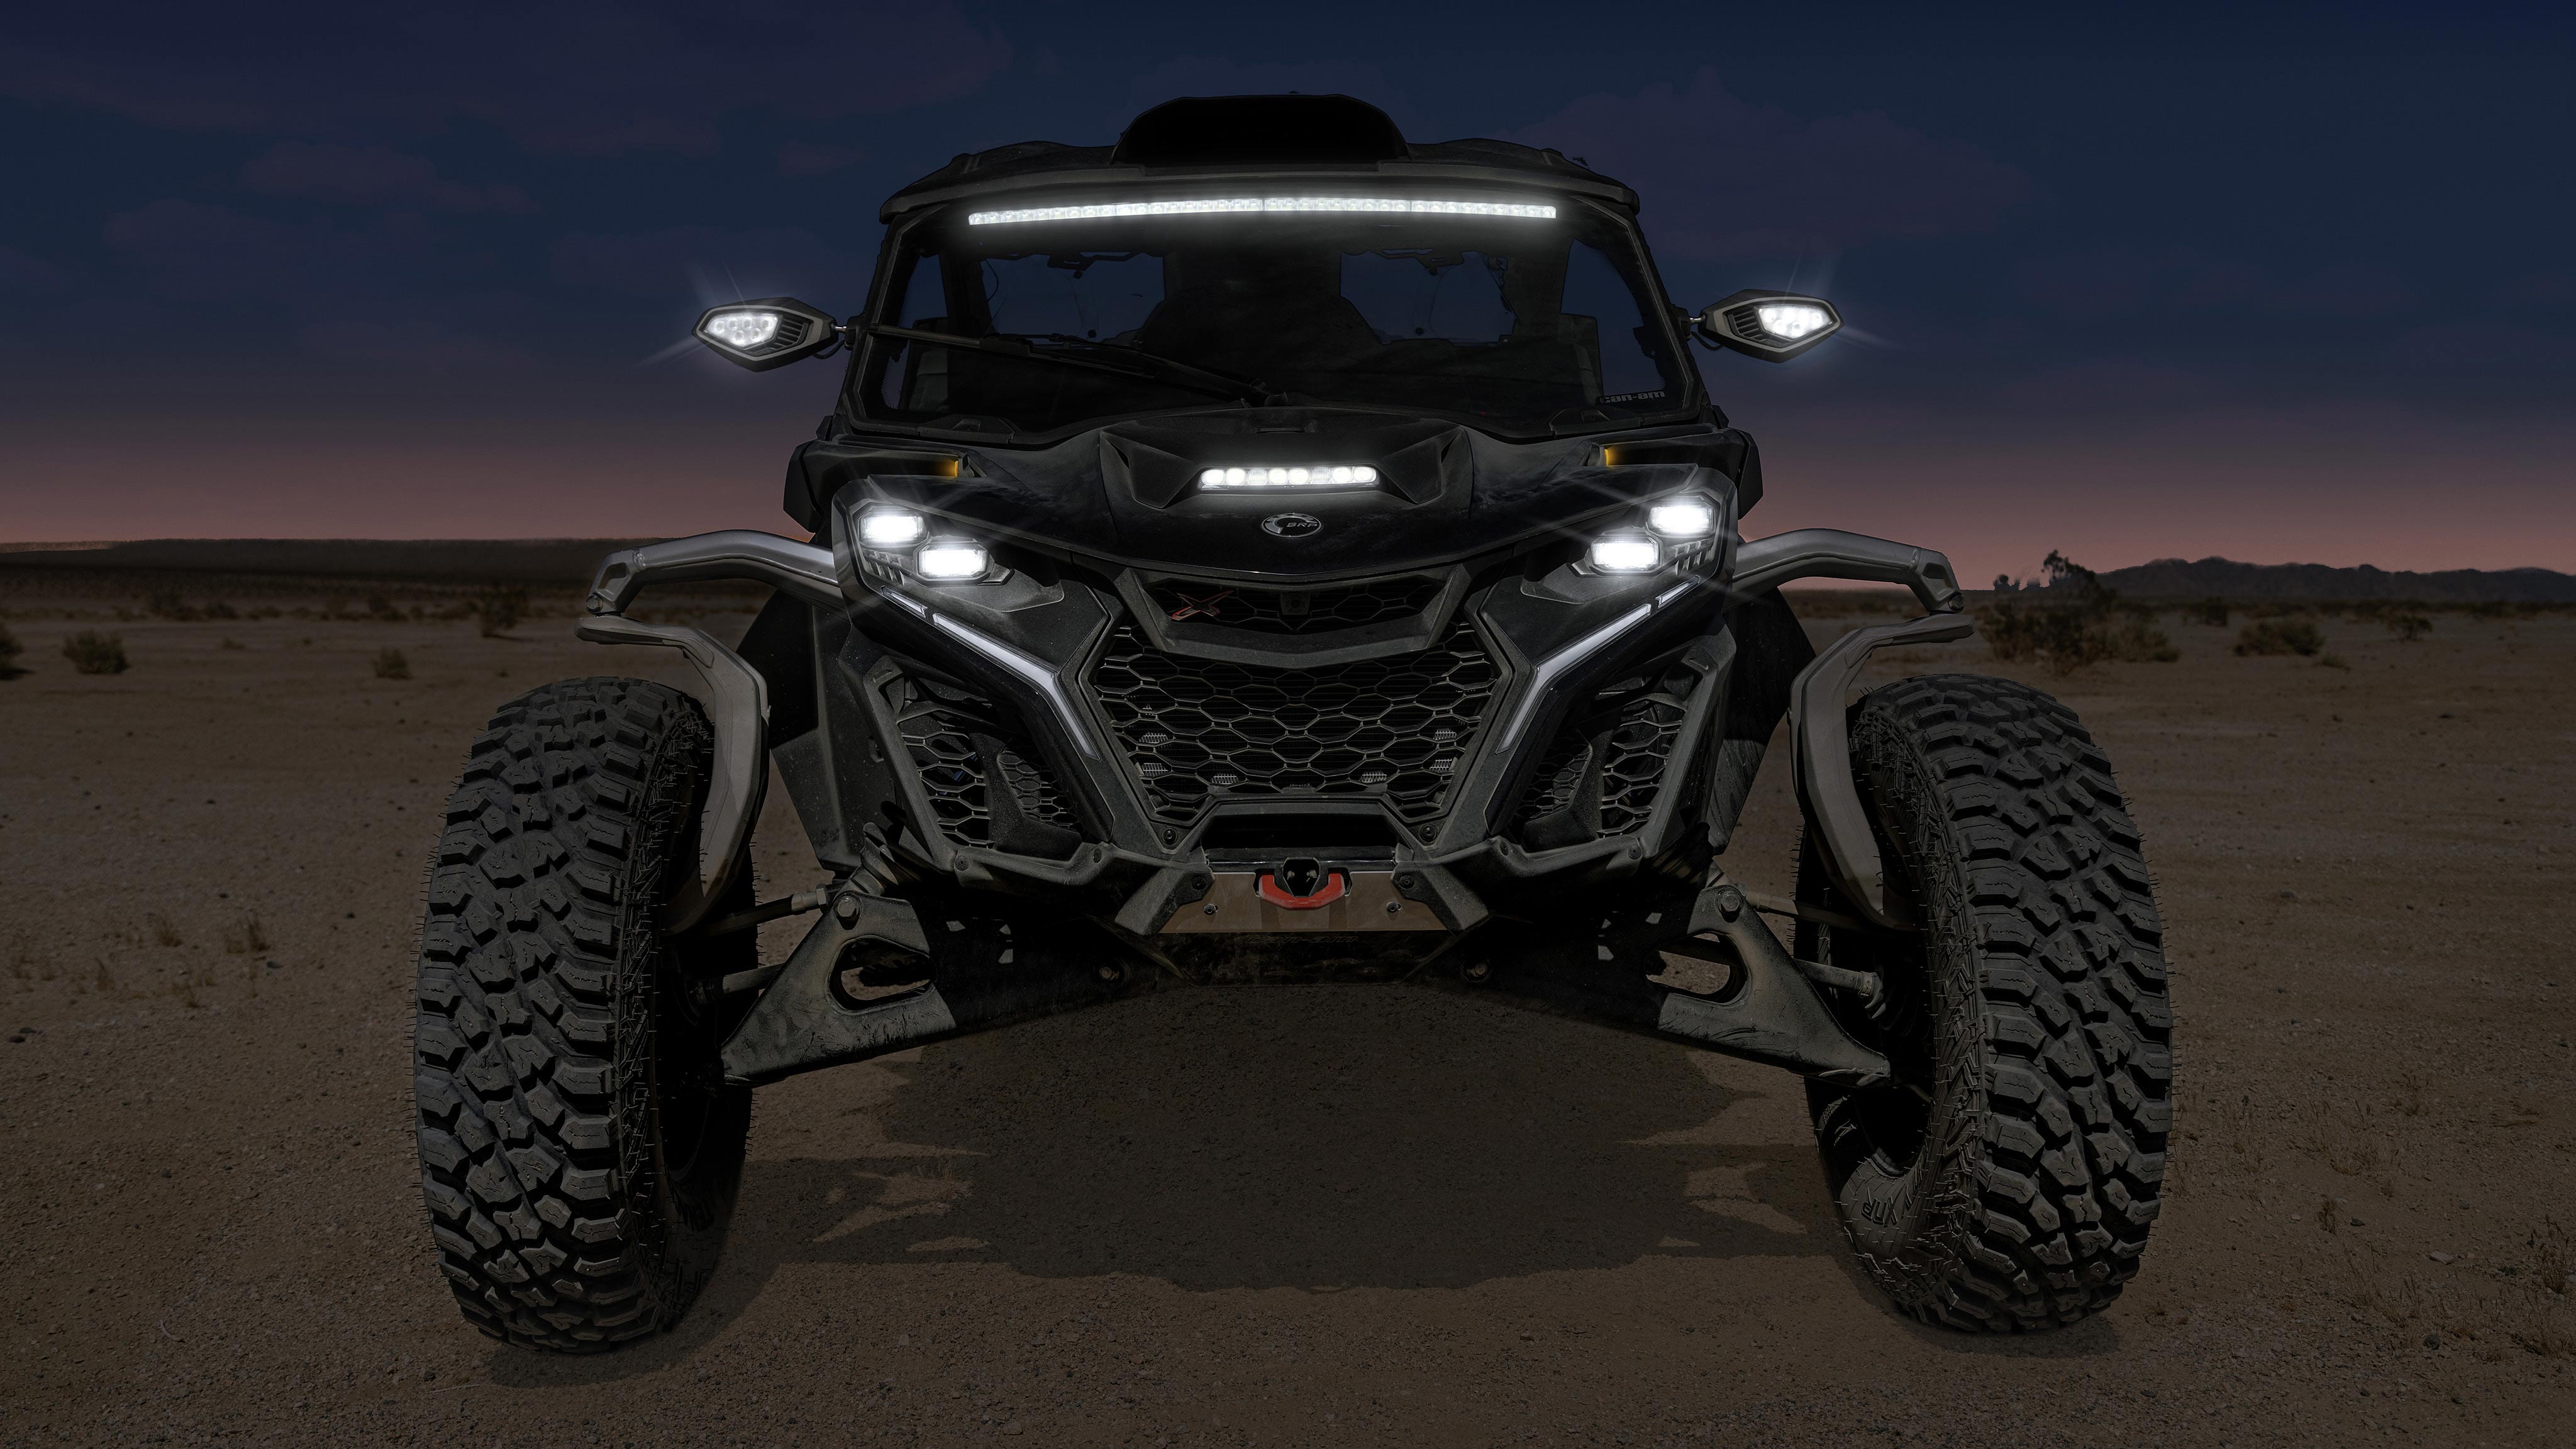 New Maverick R in the desert at night